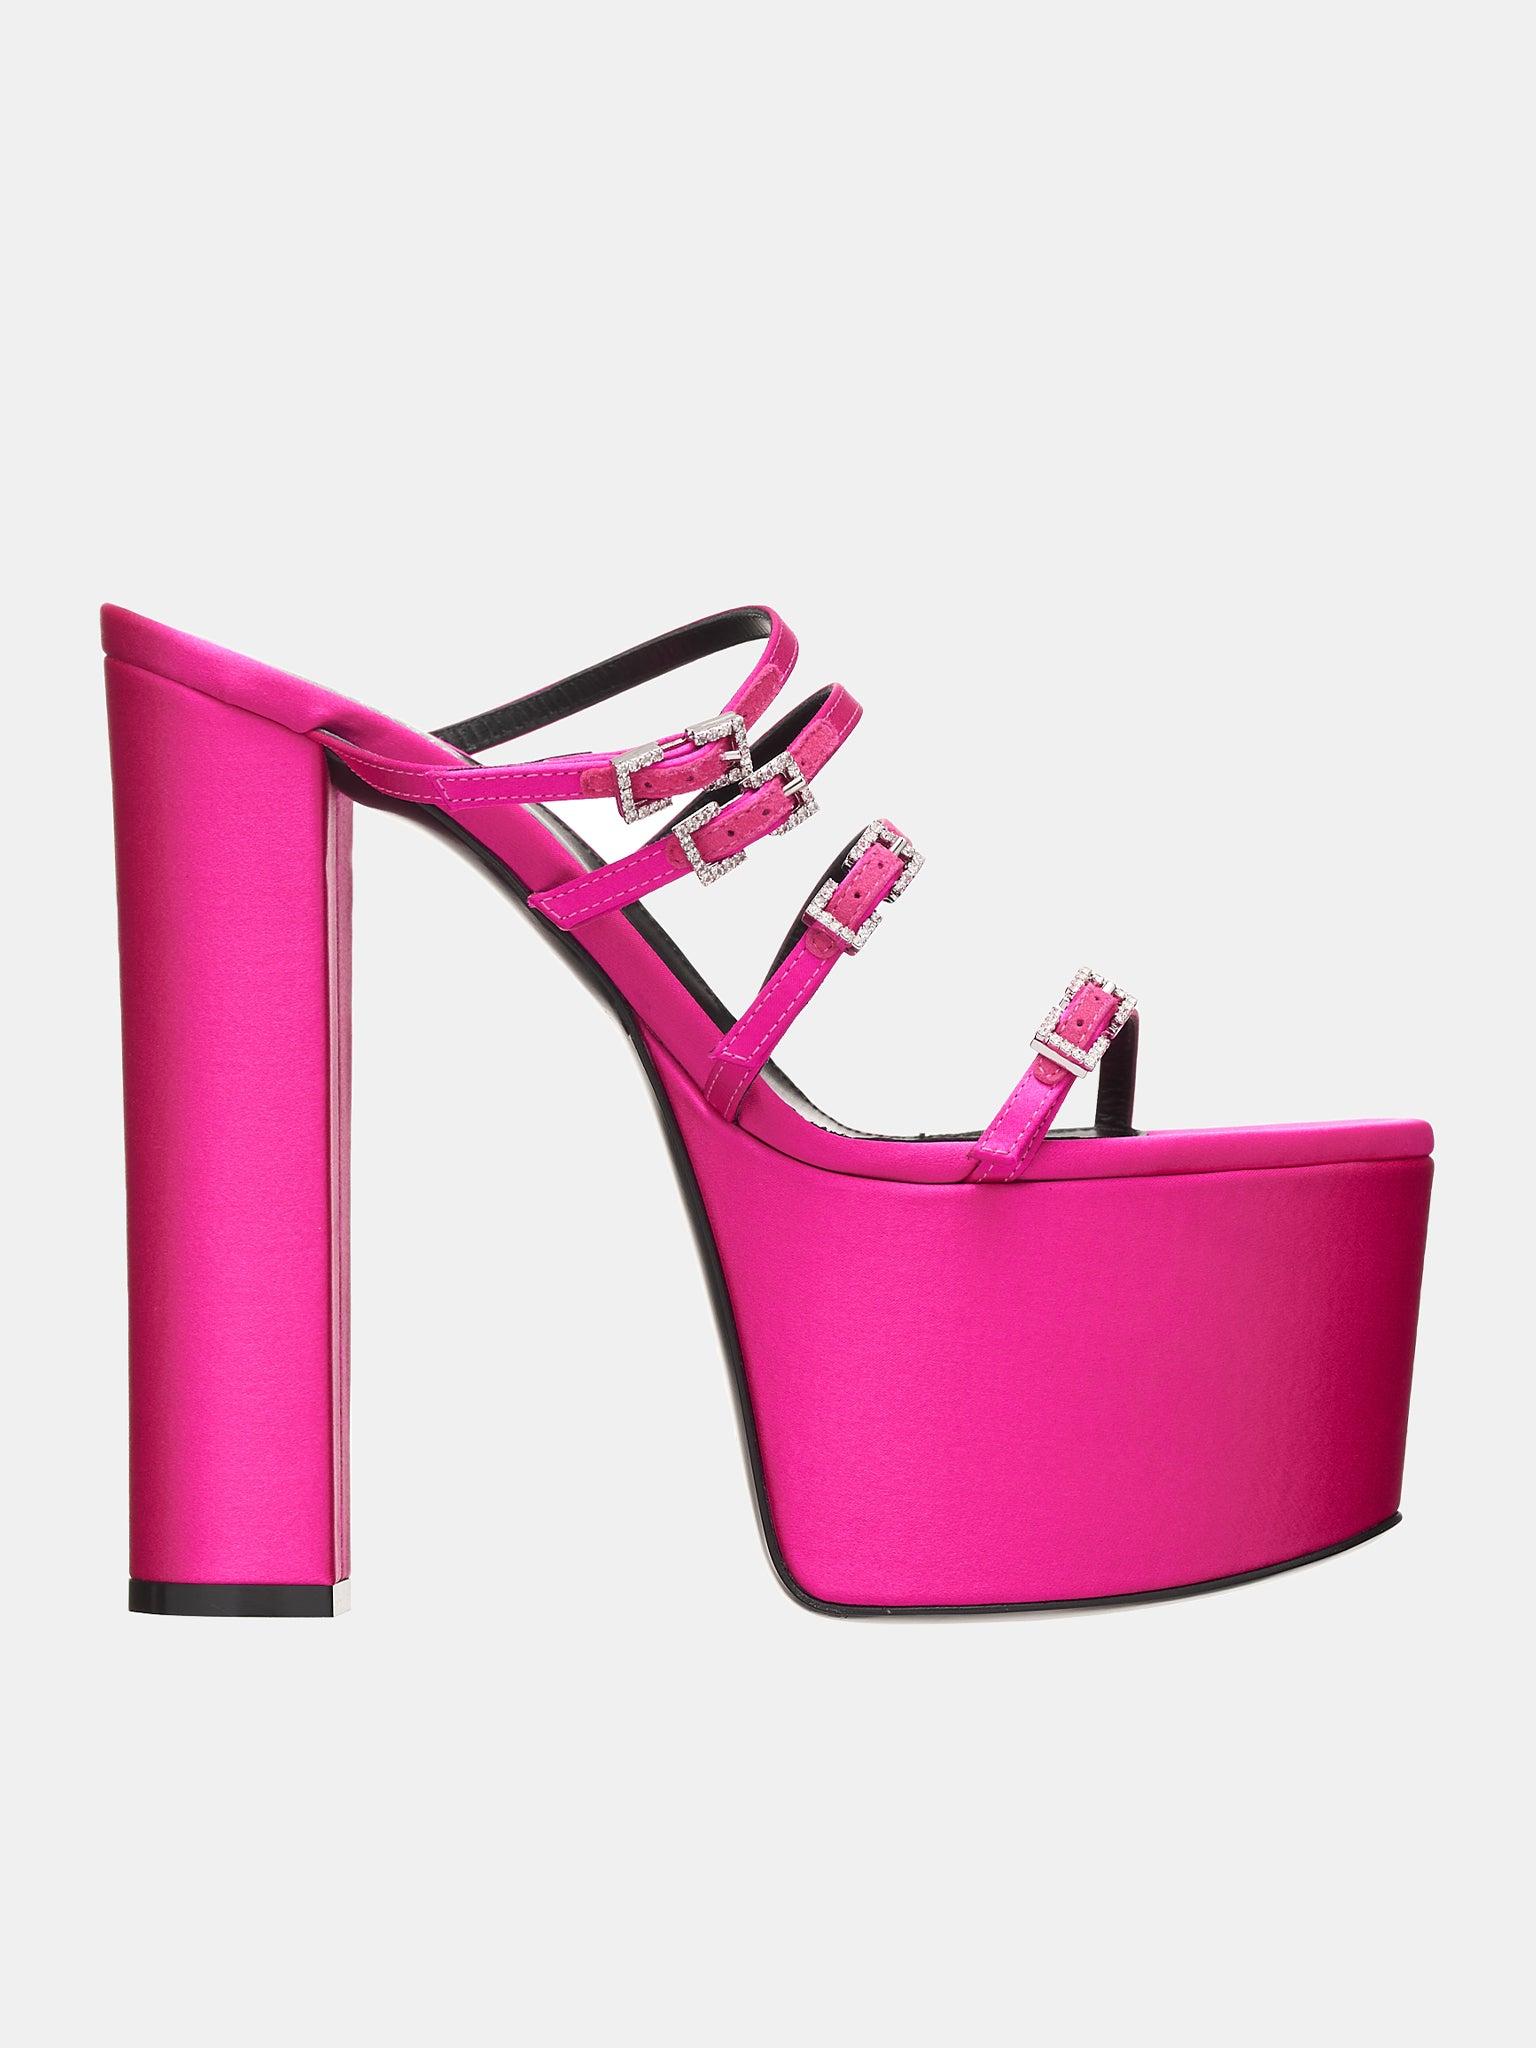 Sergio Rossi Buckle Sabot Heels in Pink | Lyst